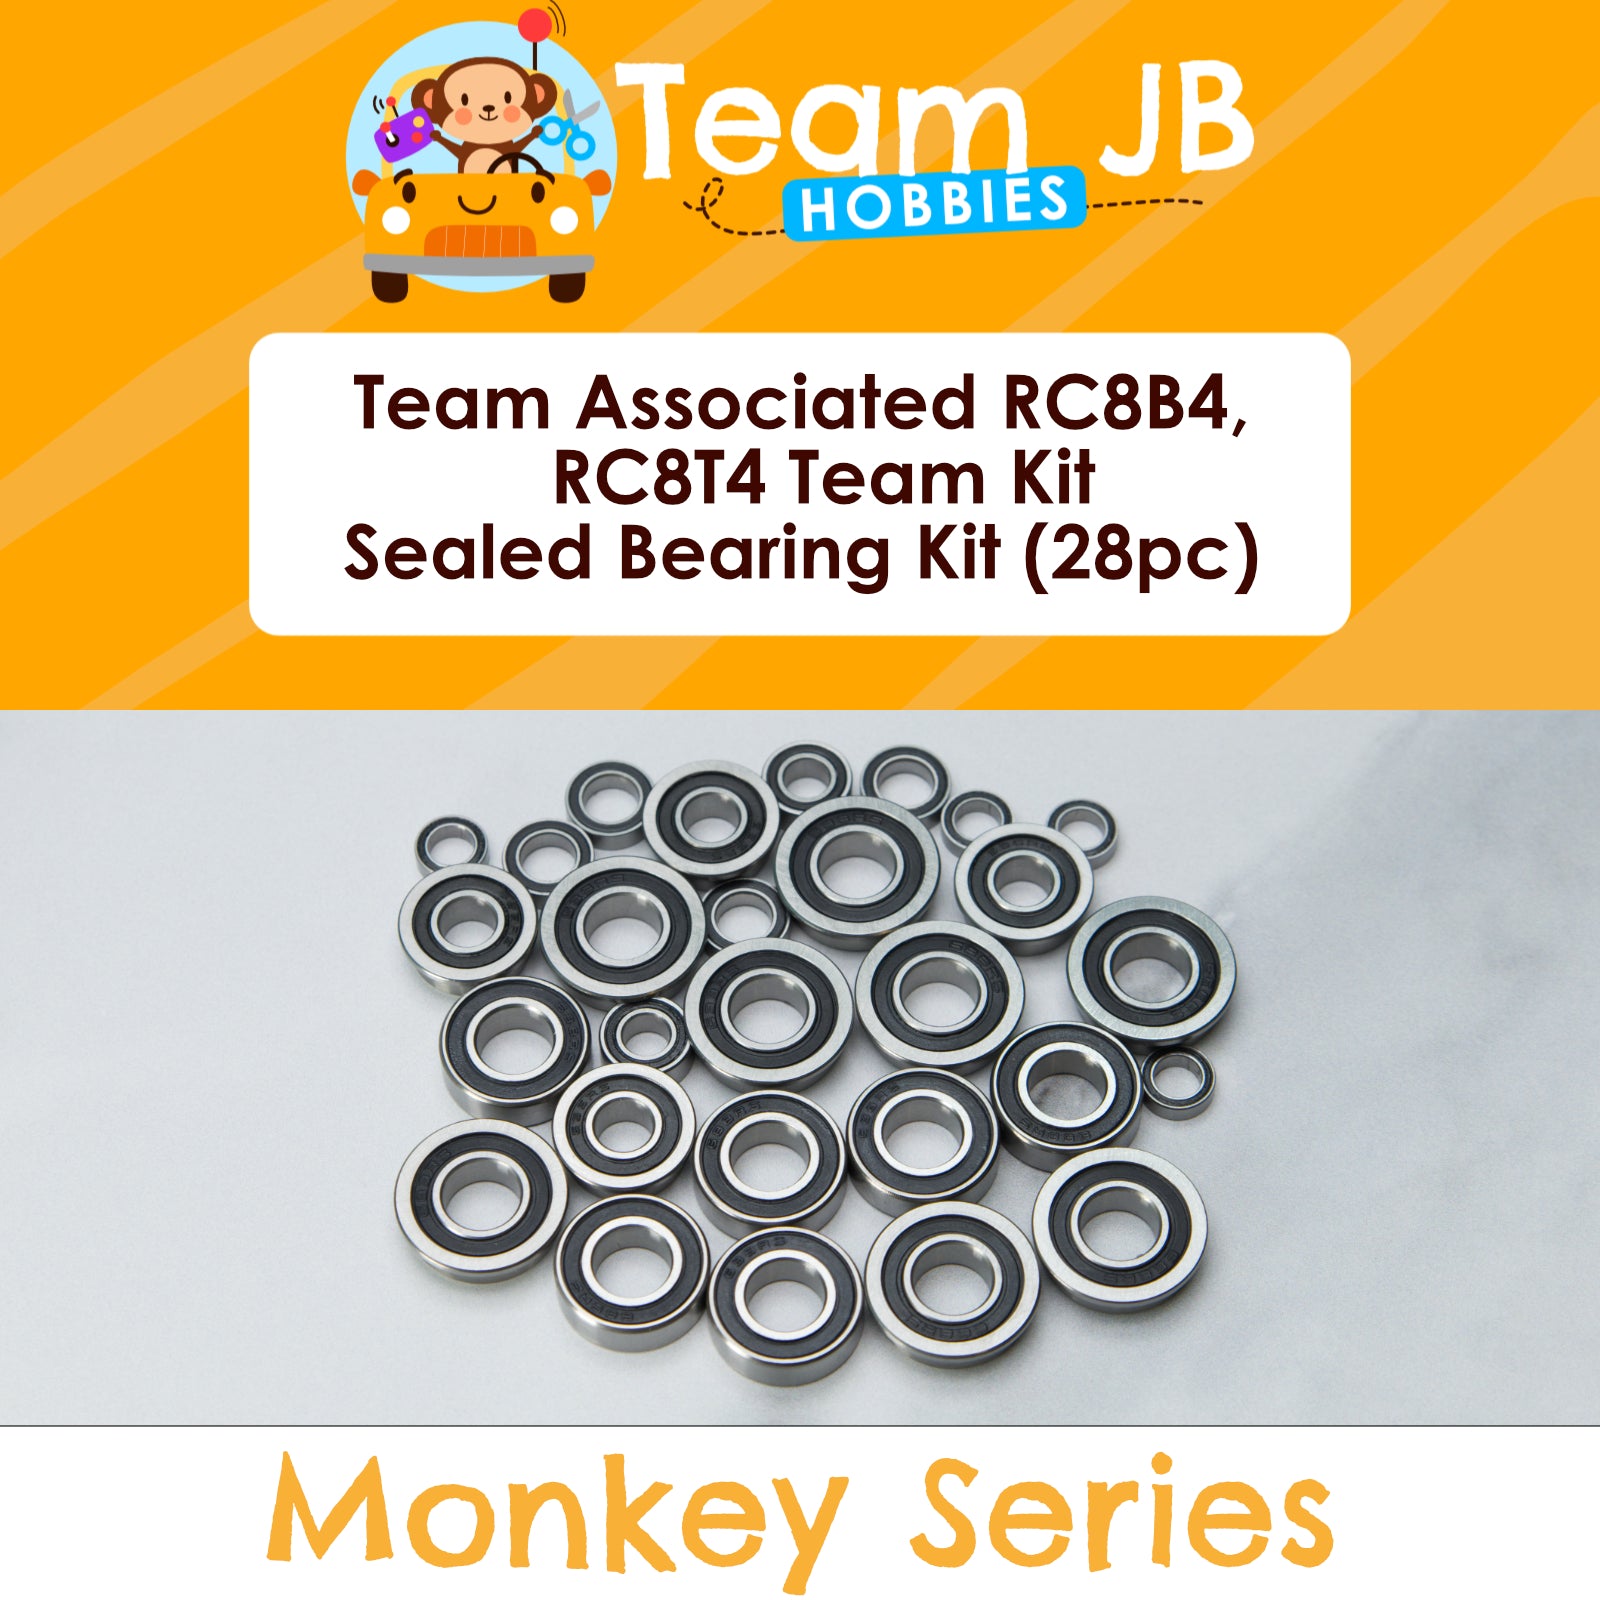 Team Associated RC8B4 Team Kit, RC8B4 Team Kit w/ FT RWB Chassis, RC8T4 Team Kit - Sealed Bearing Kit